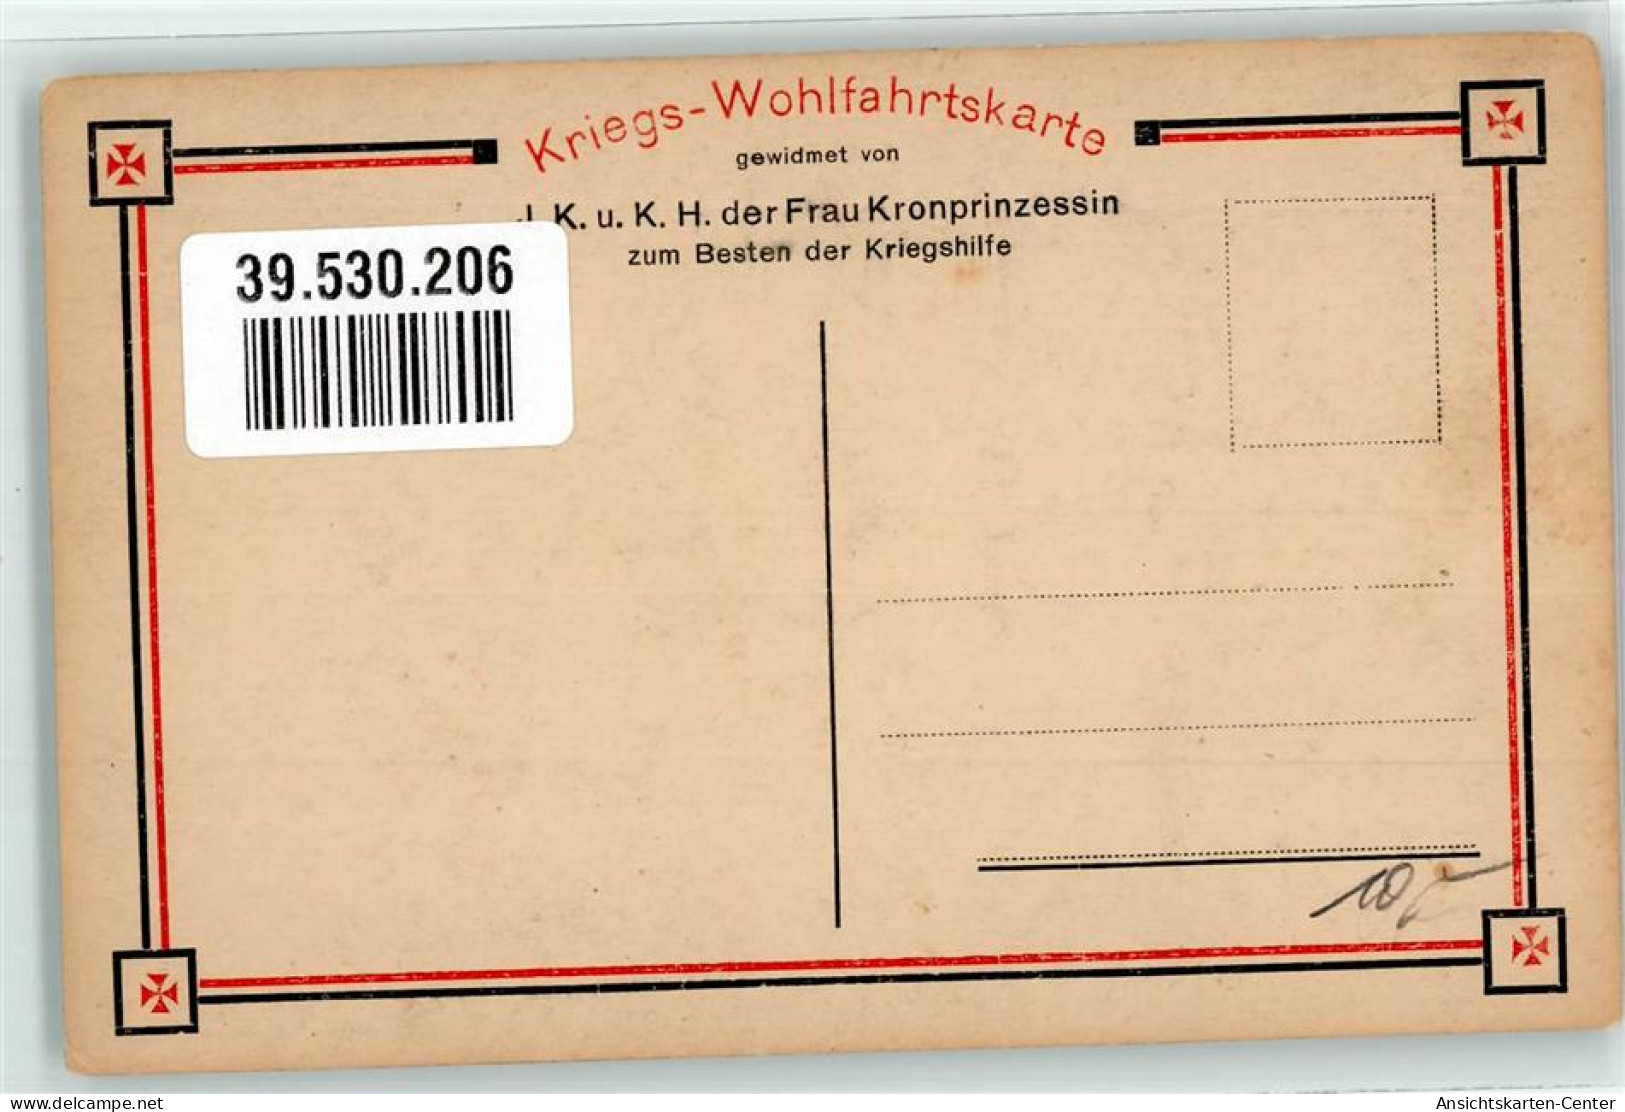 39530206 - NPG Nr.4872  Autograph Kriegs Wohlfahrtskarte - Koninklijke Families